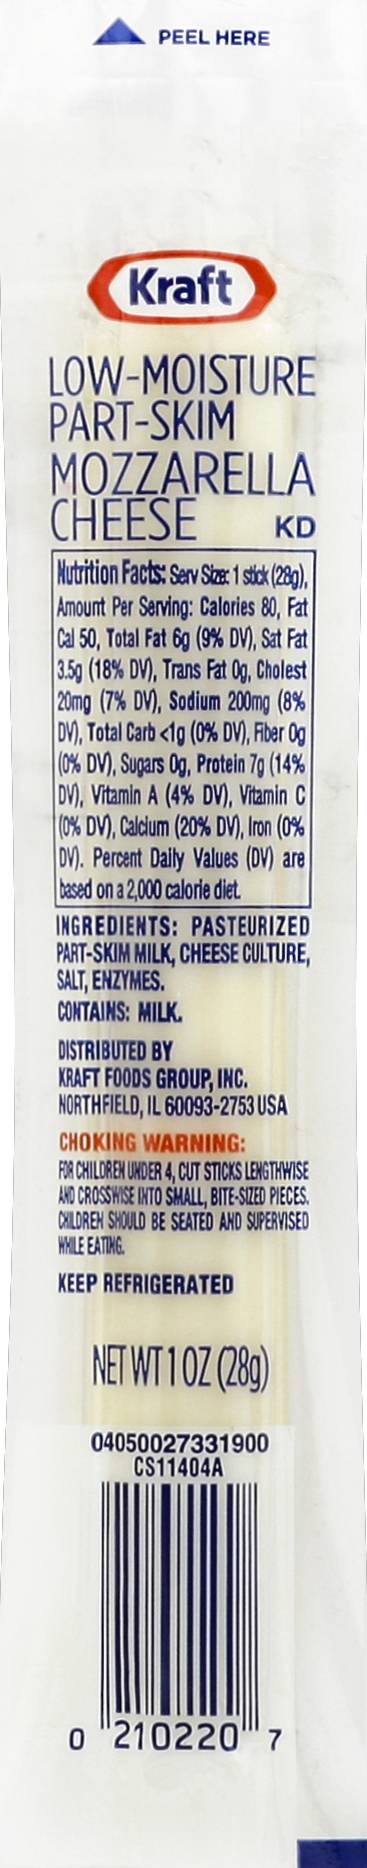 Kraft Low-Moisture Part-Skim Mozzarella Cheese